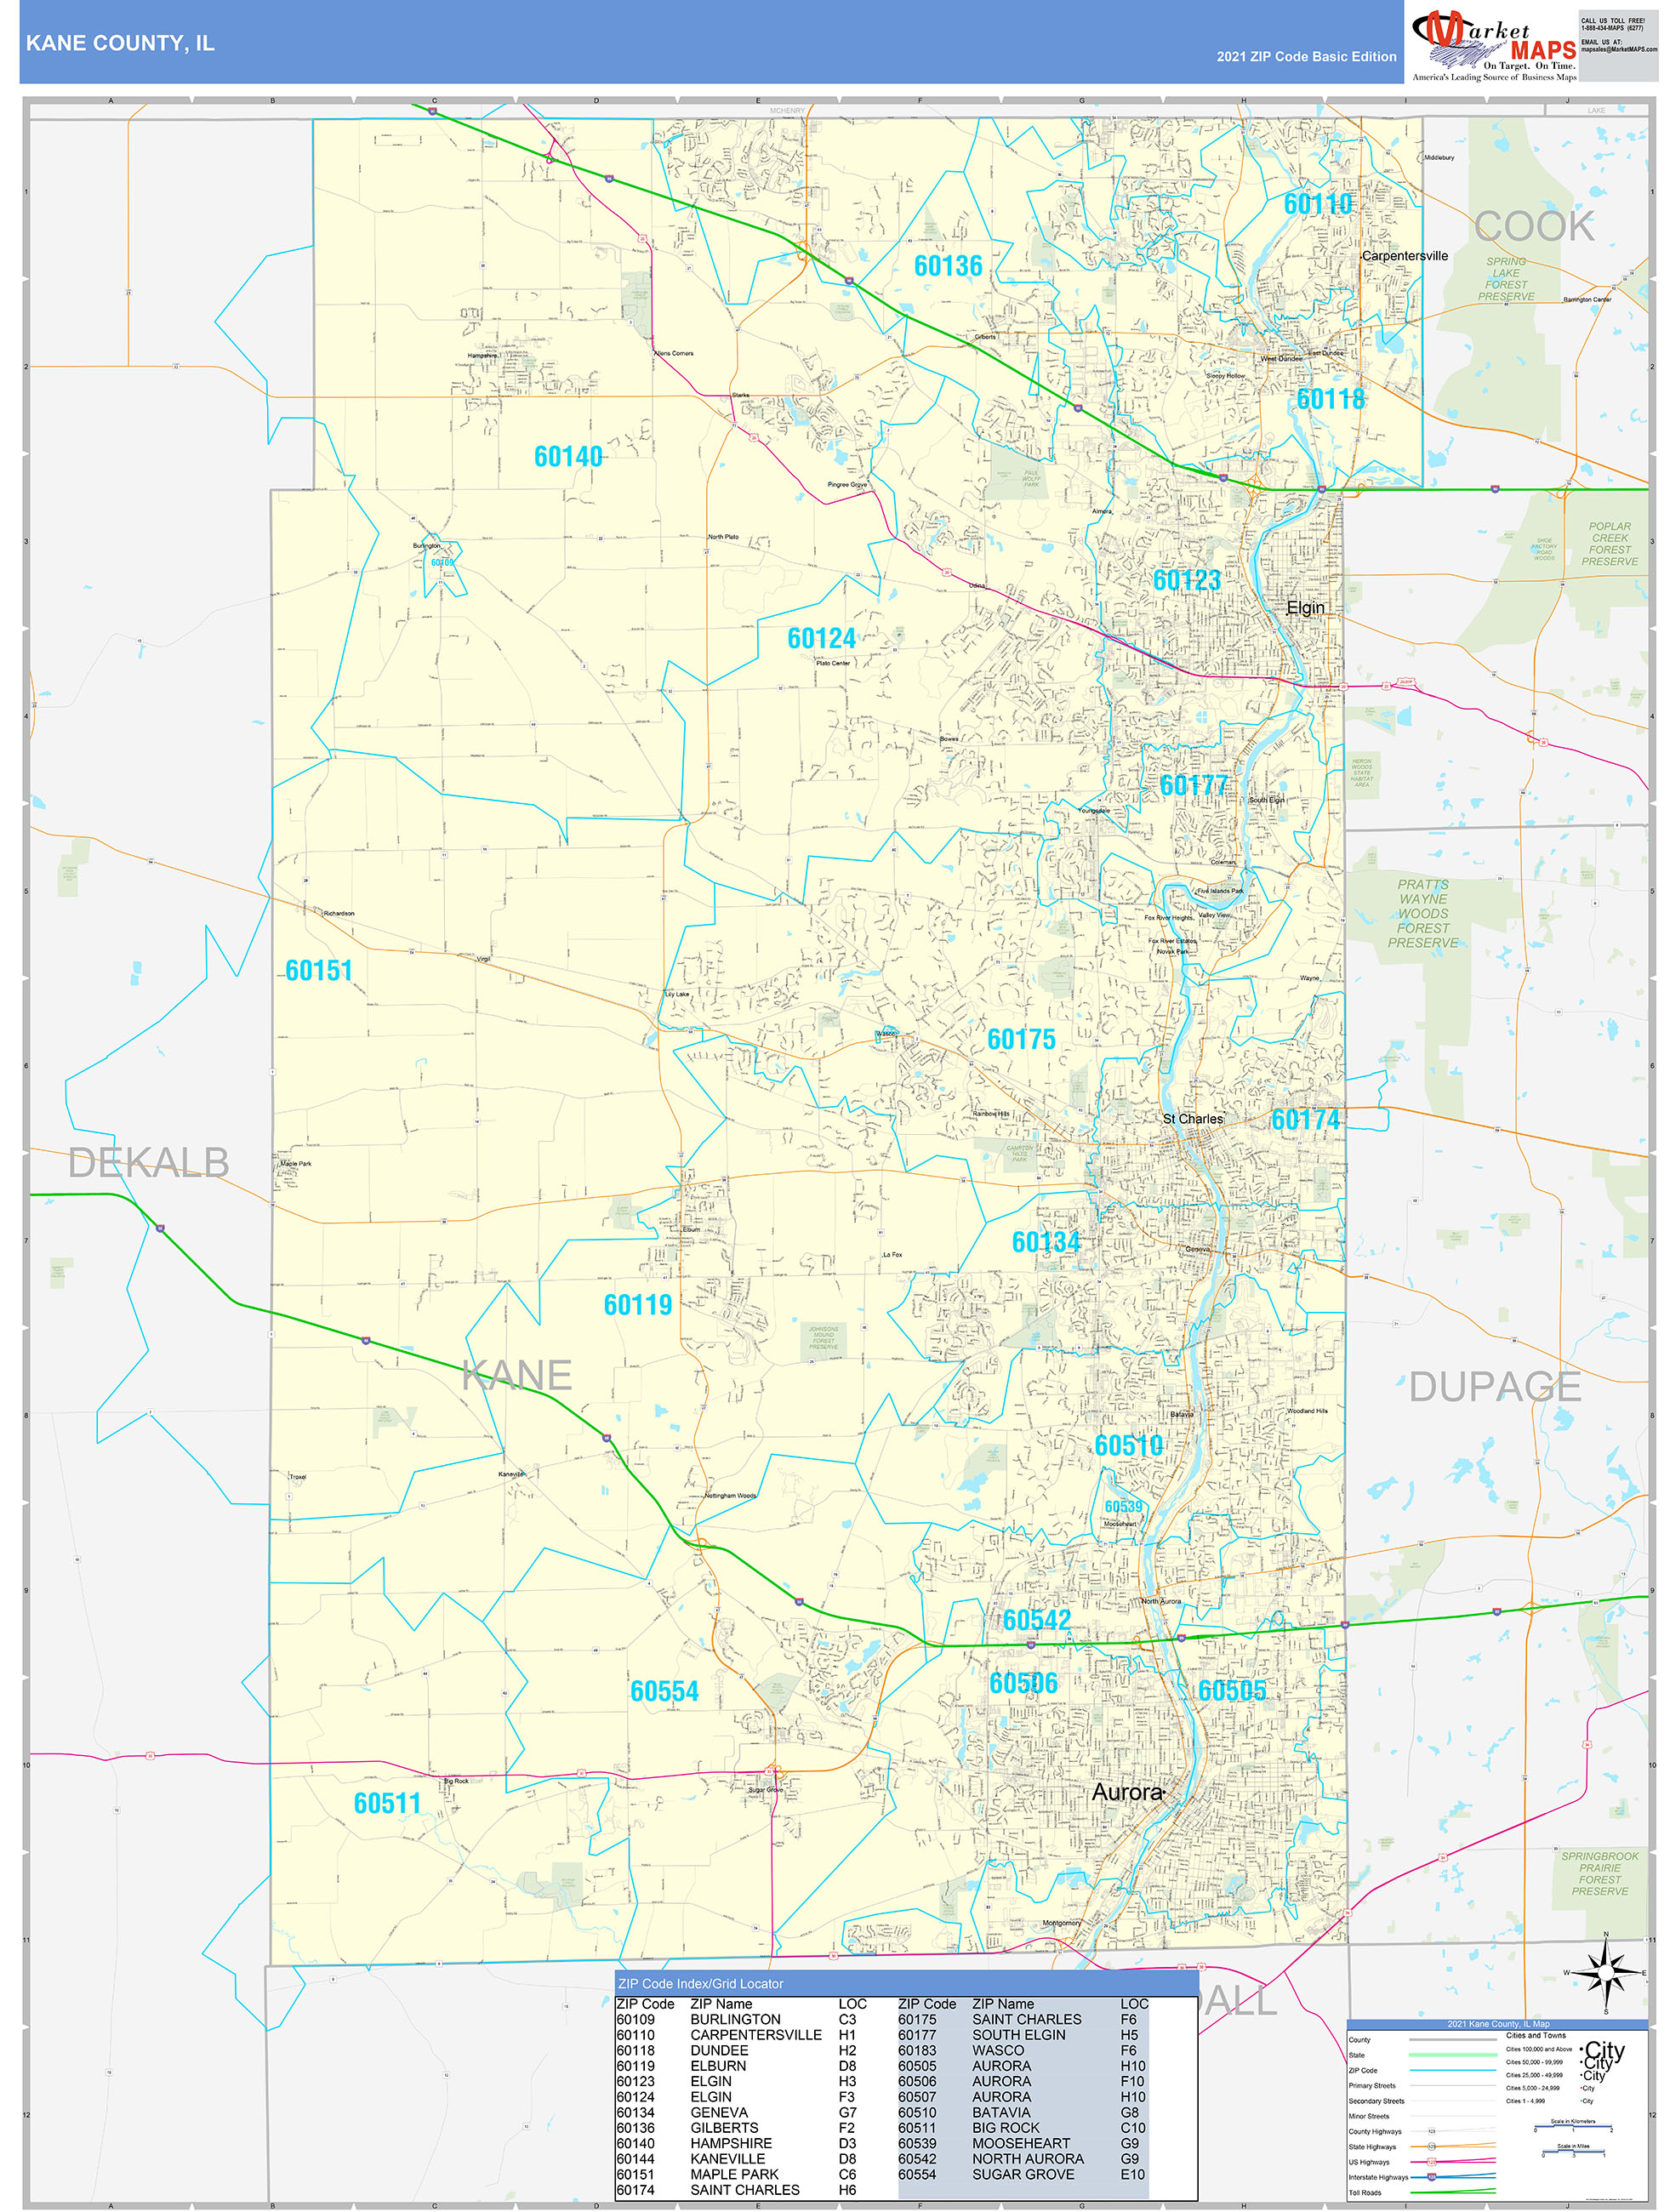 Kane County, IL Zip Code Wall Map Basic Style by MarketMAPS MapSales